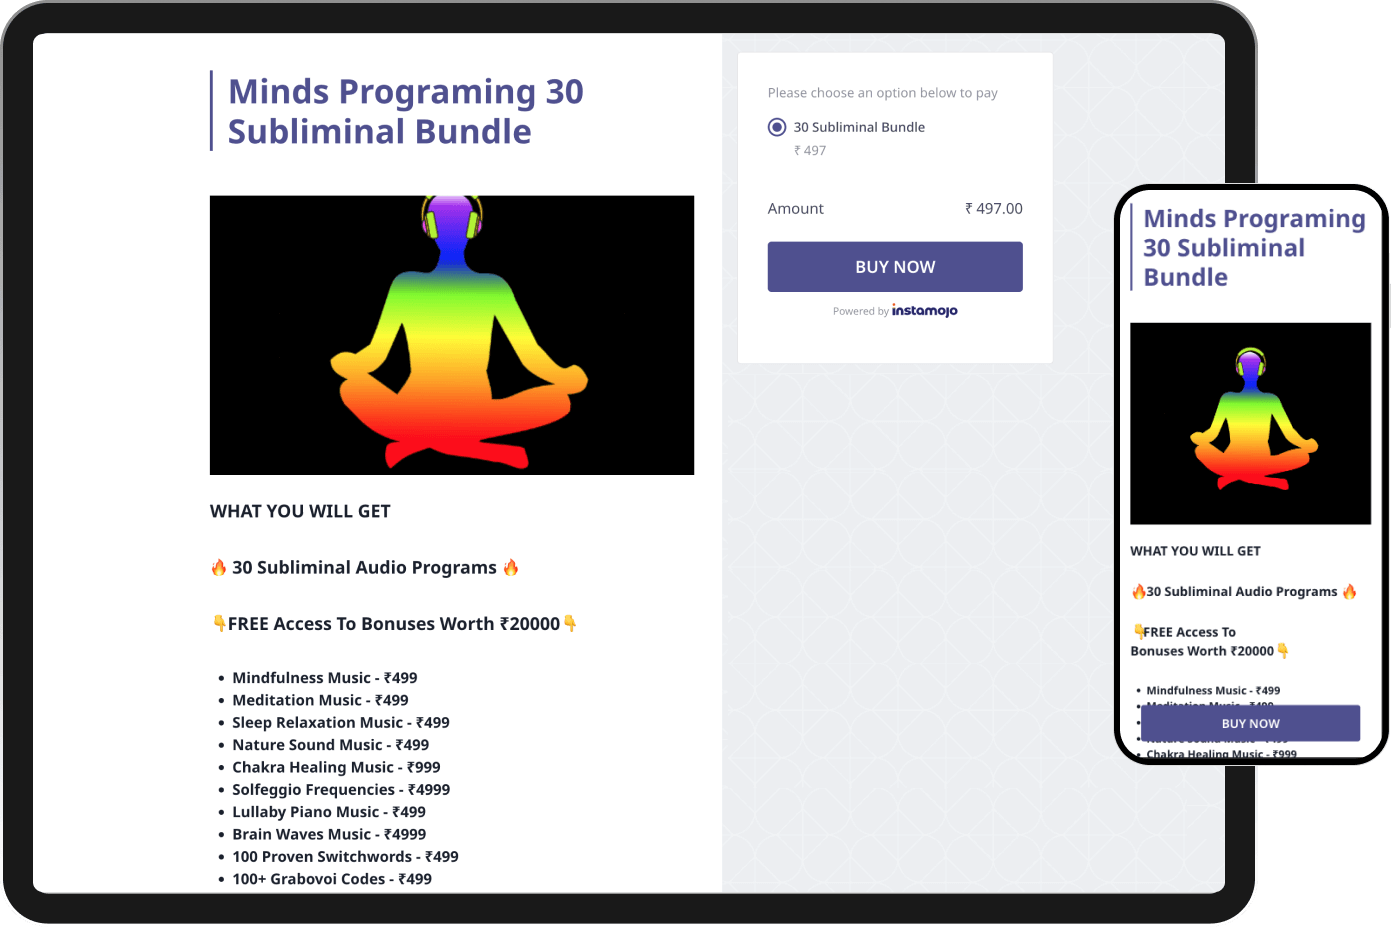 Minds Programing 30 Subliminal Bundle